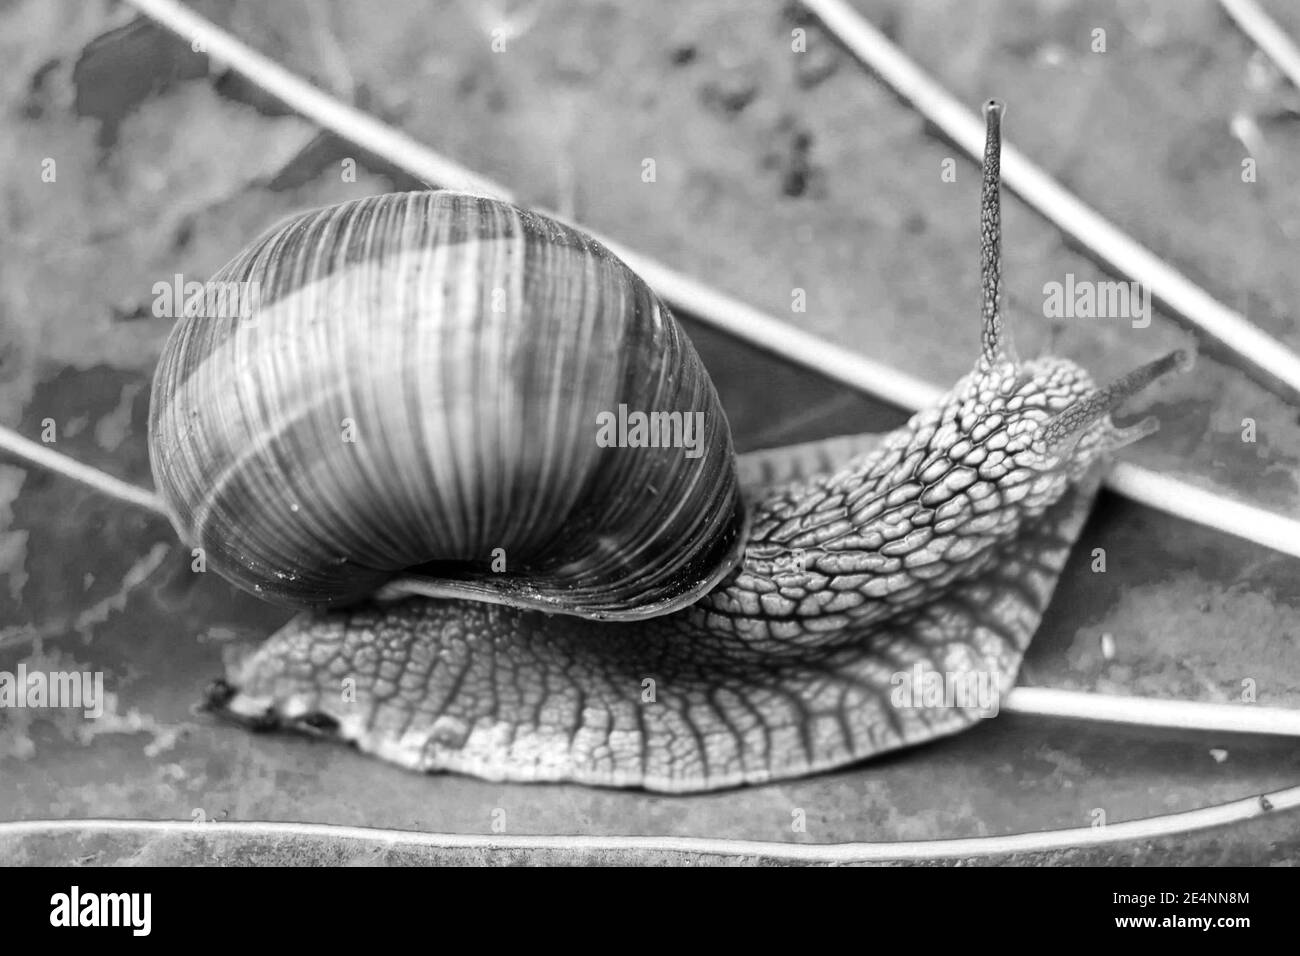 Garden snail on a wet leaf. Stock Photo